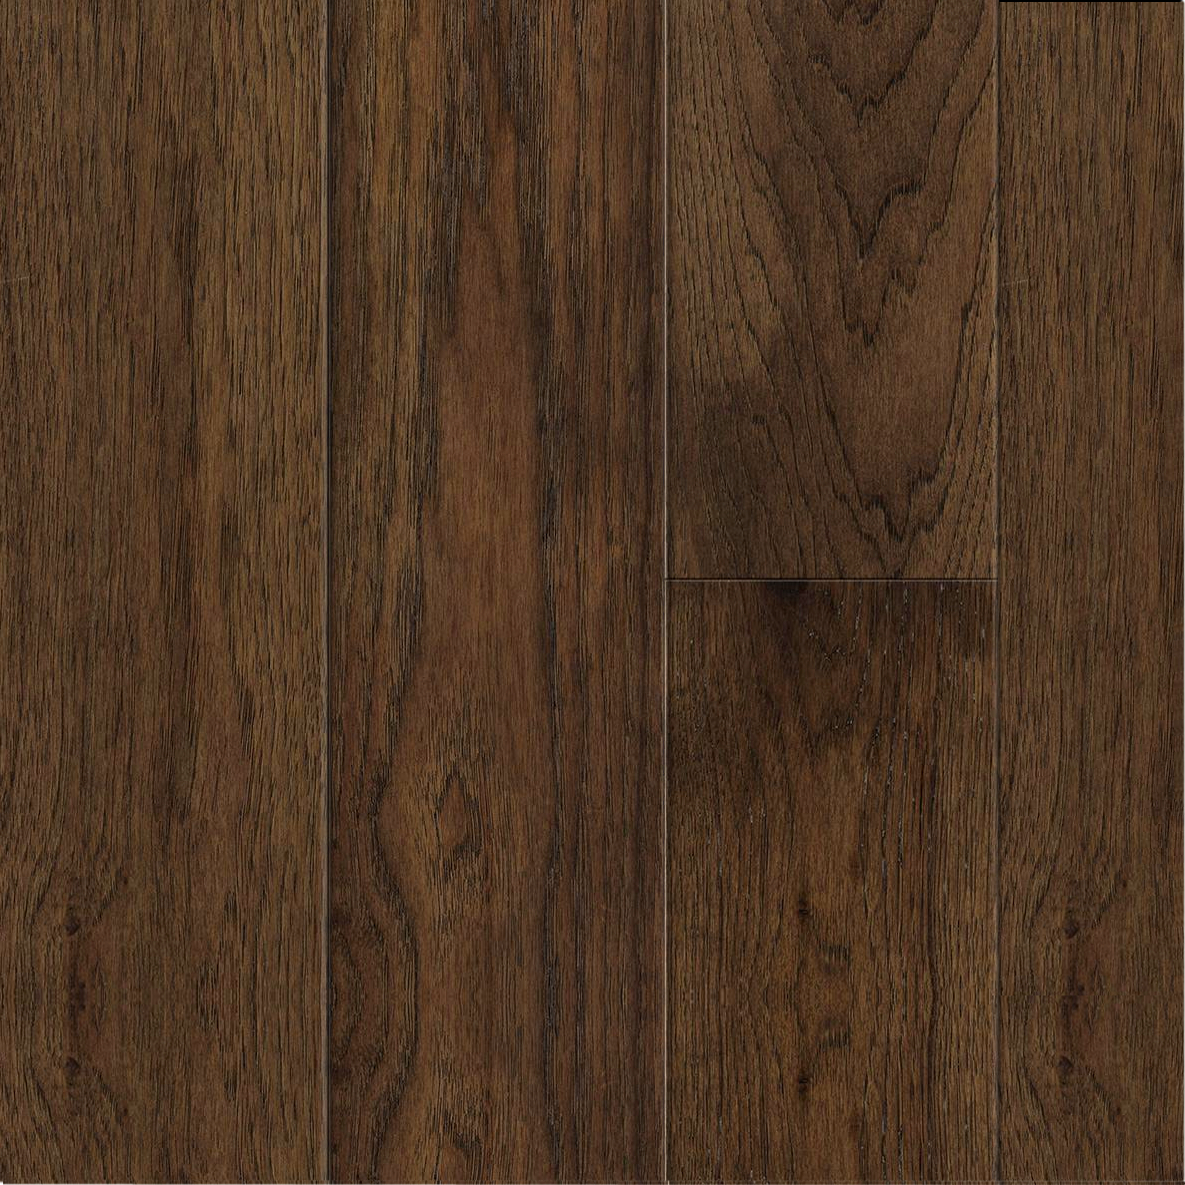 Forest Hickory Engineered Hardwood, Hardwood Floor Color Samples